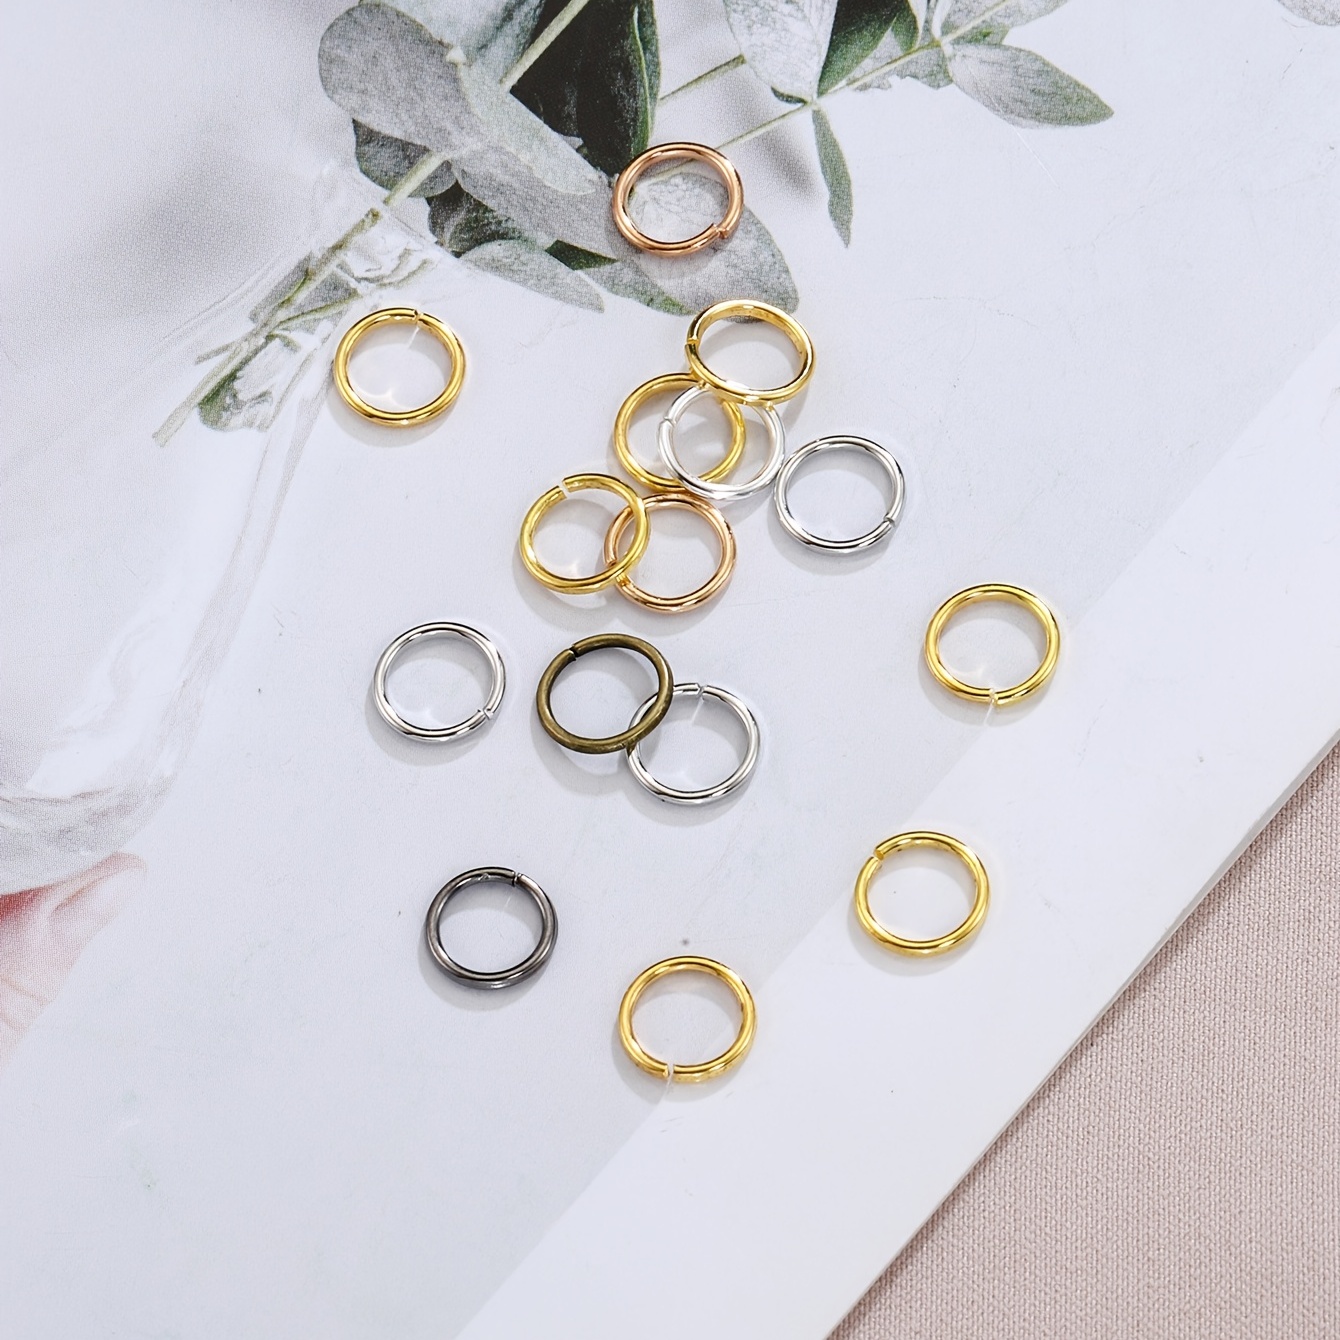 1Box 5 Colors Metal Jewelry Making Kit Chain Split Jump Ring